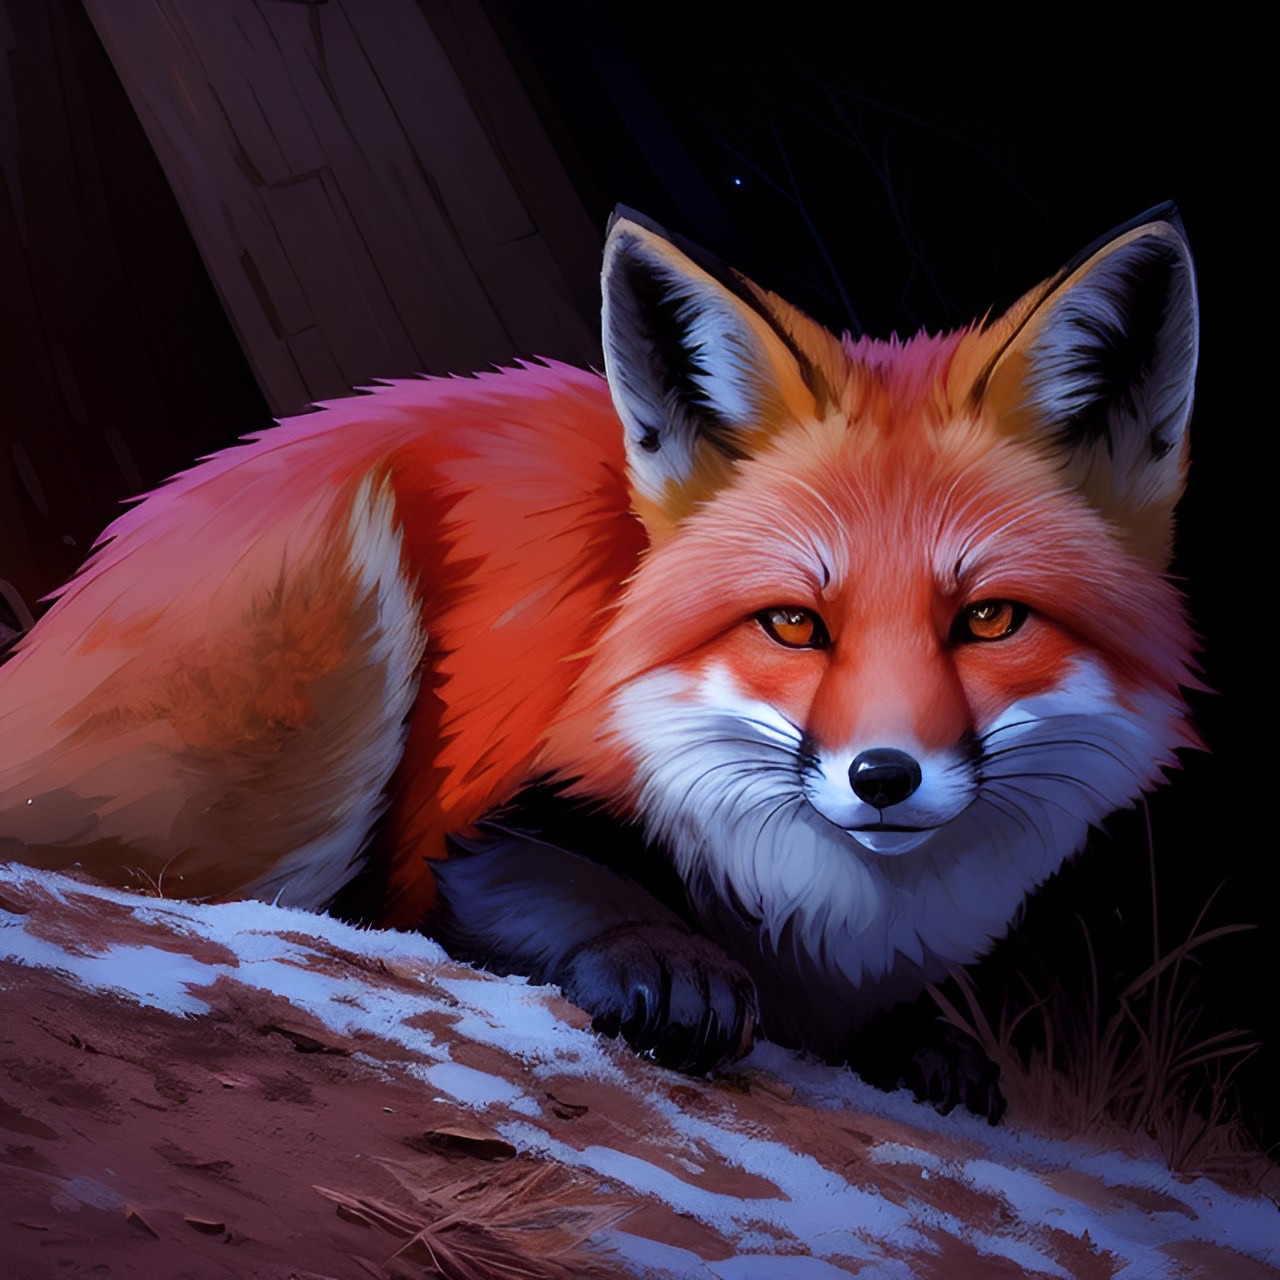 A fox on the ground